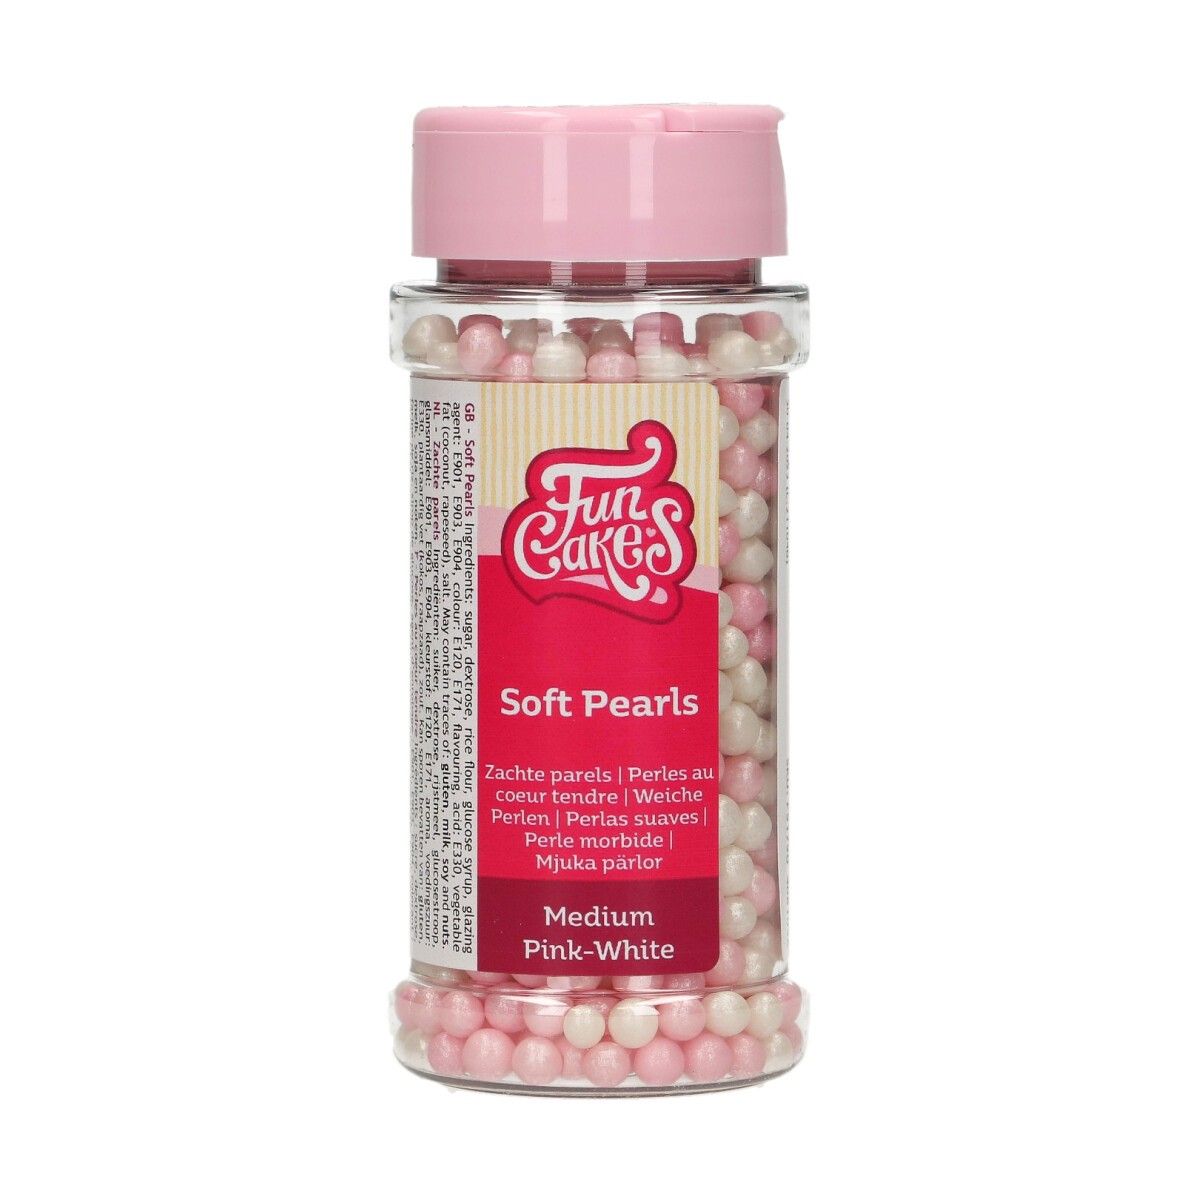 Se Soft Pearls Medium Pink-White 60 g hos BageTid.dk